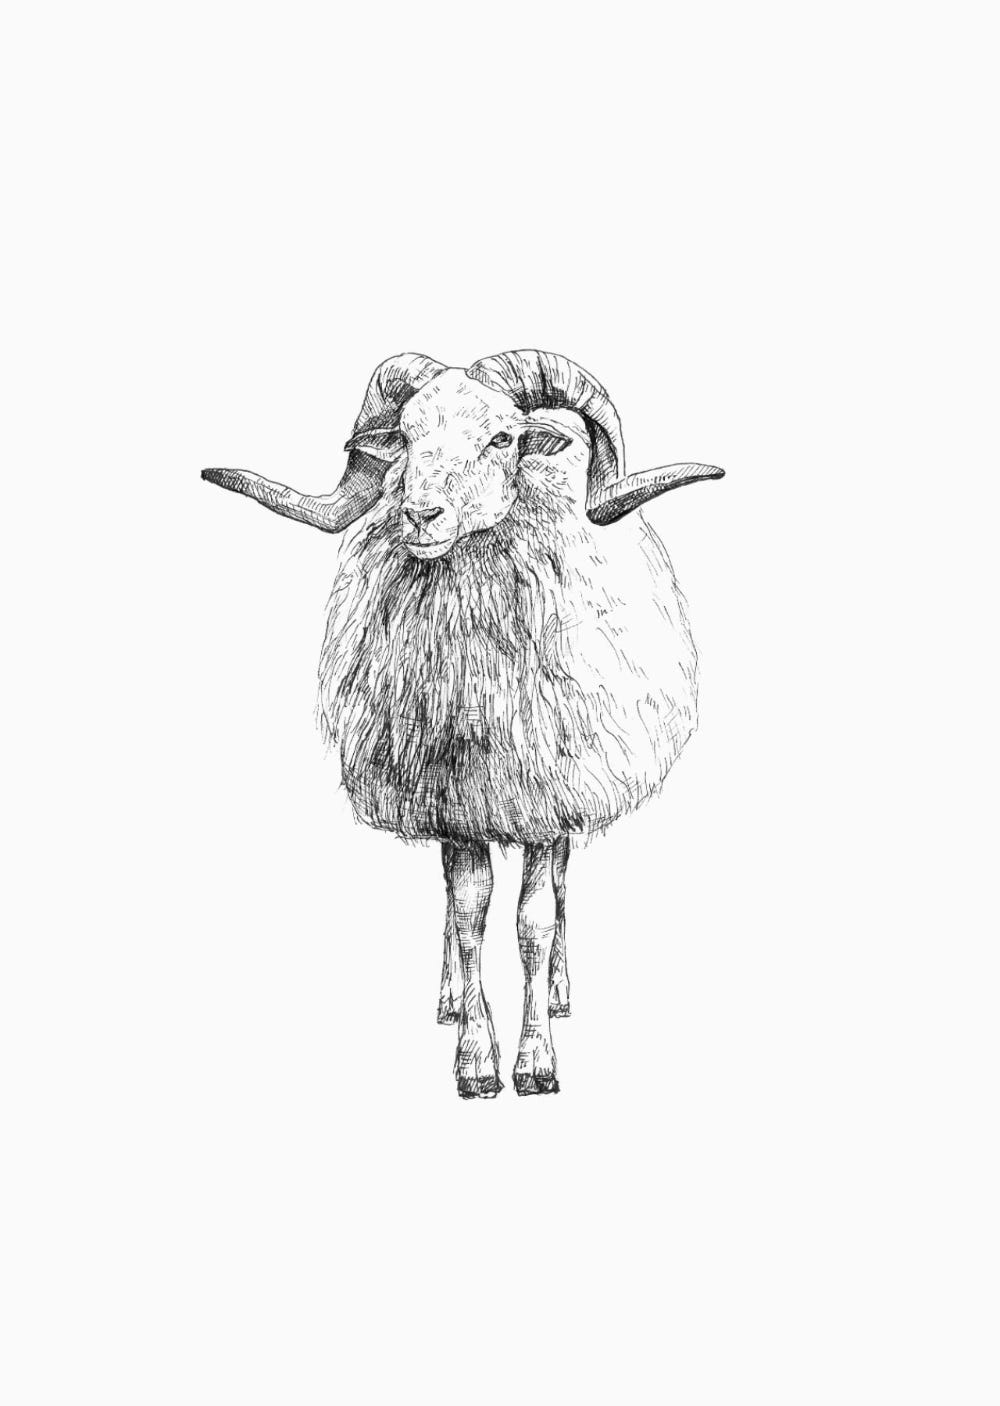 Animals - Drenthe Heath Sheep | Animals, Animal art, Illustration